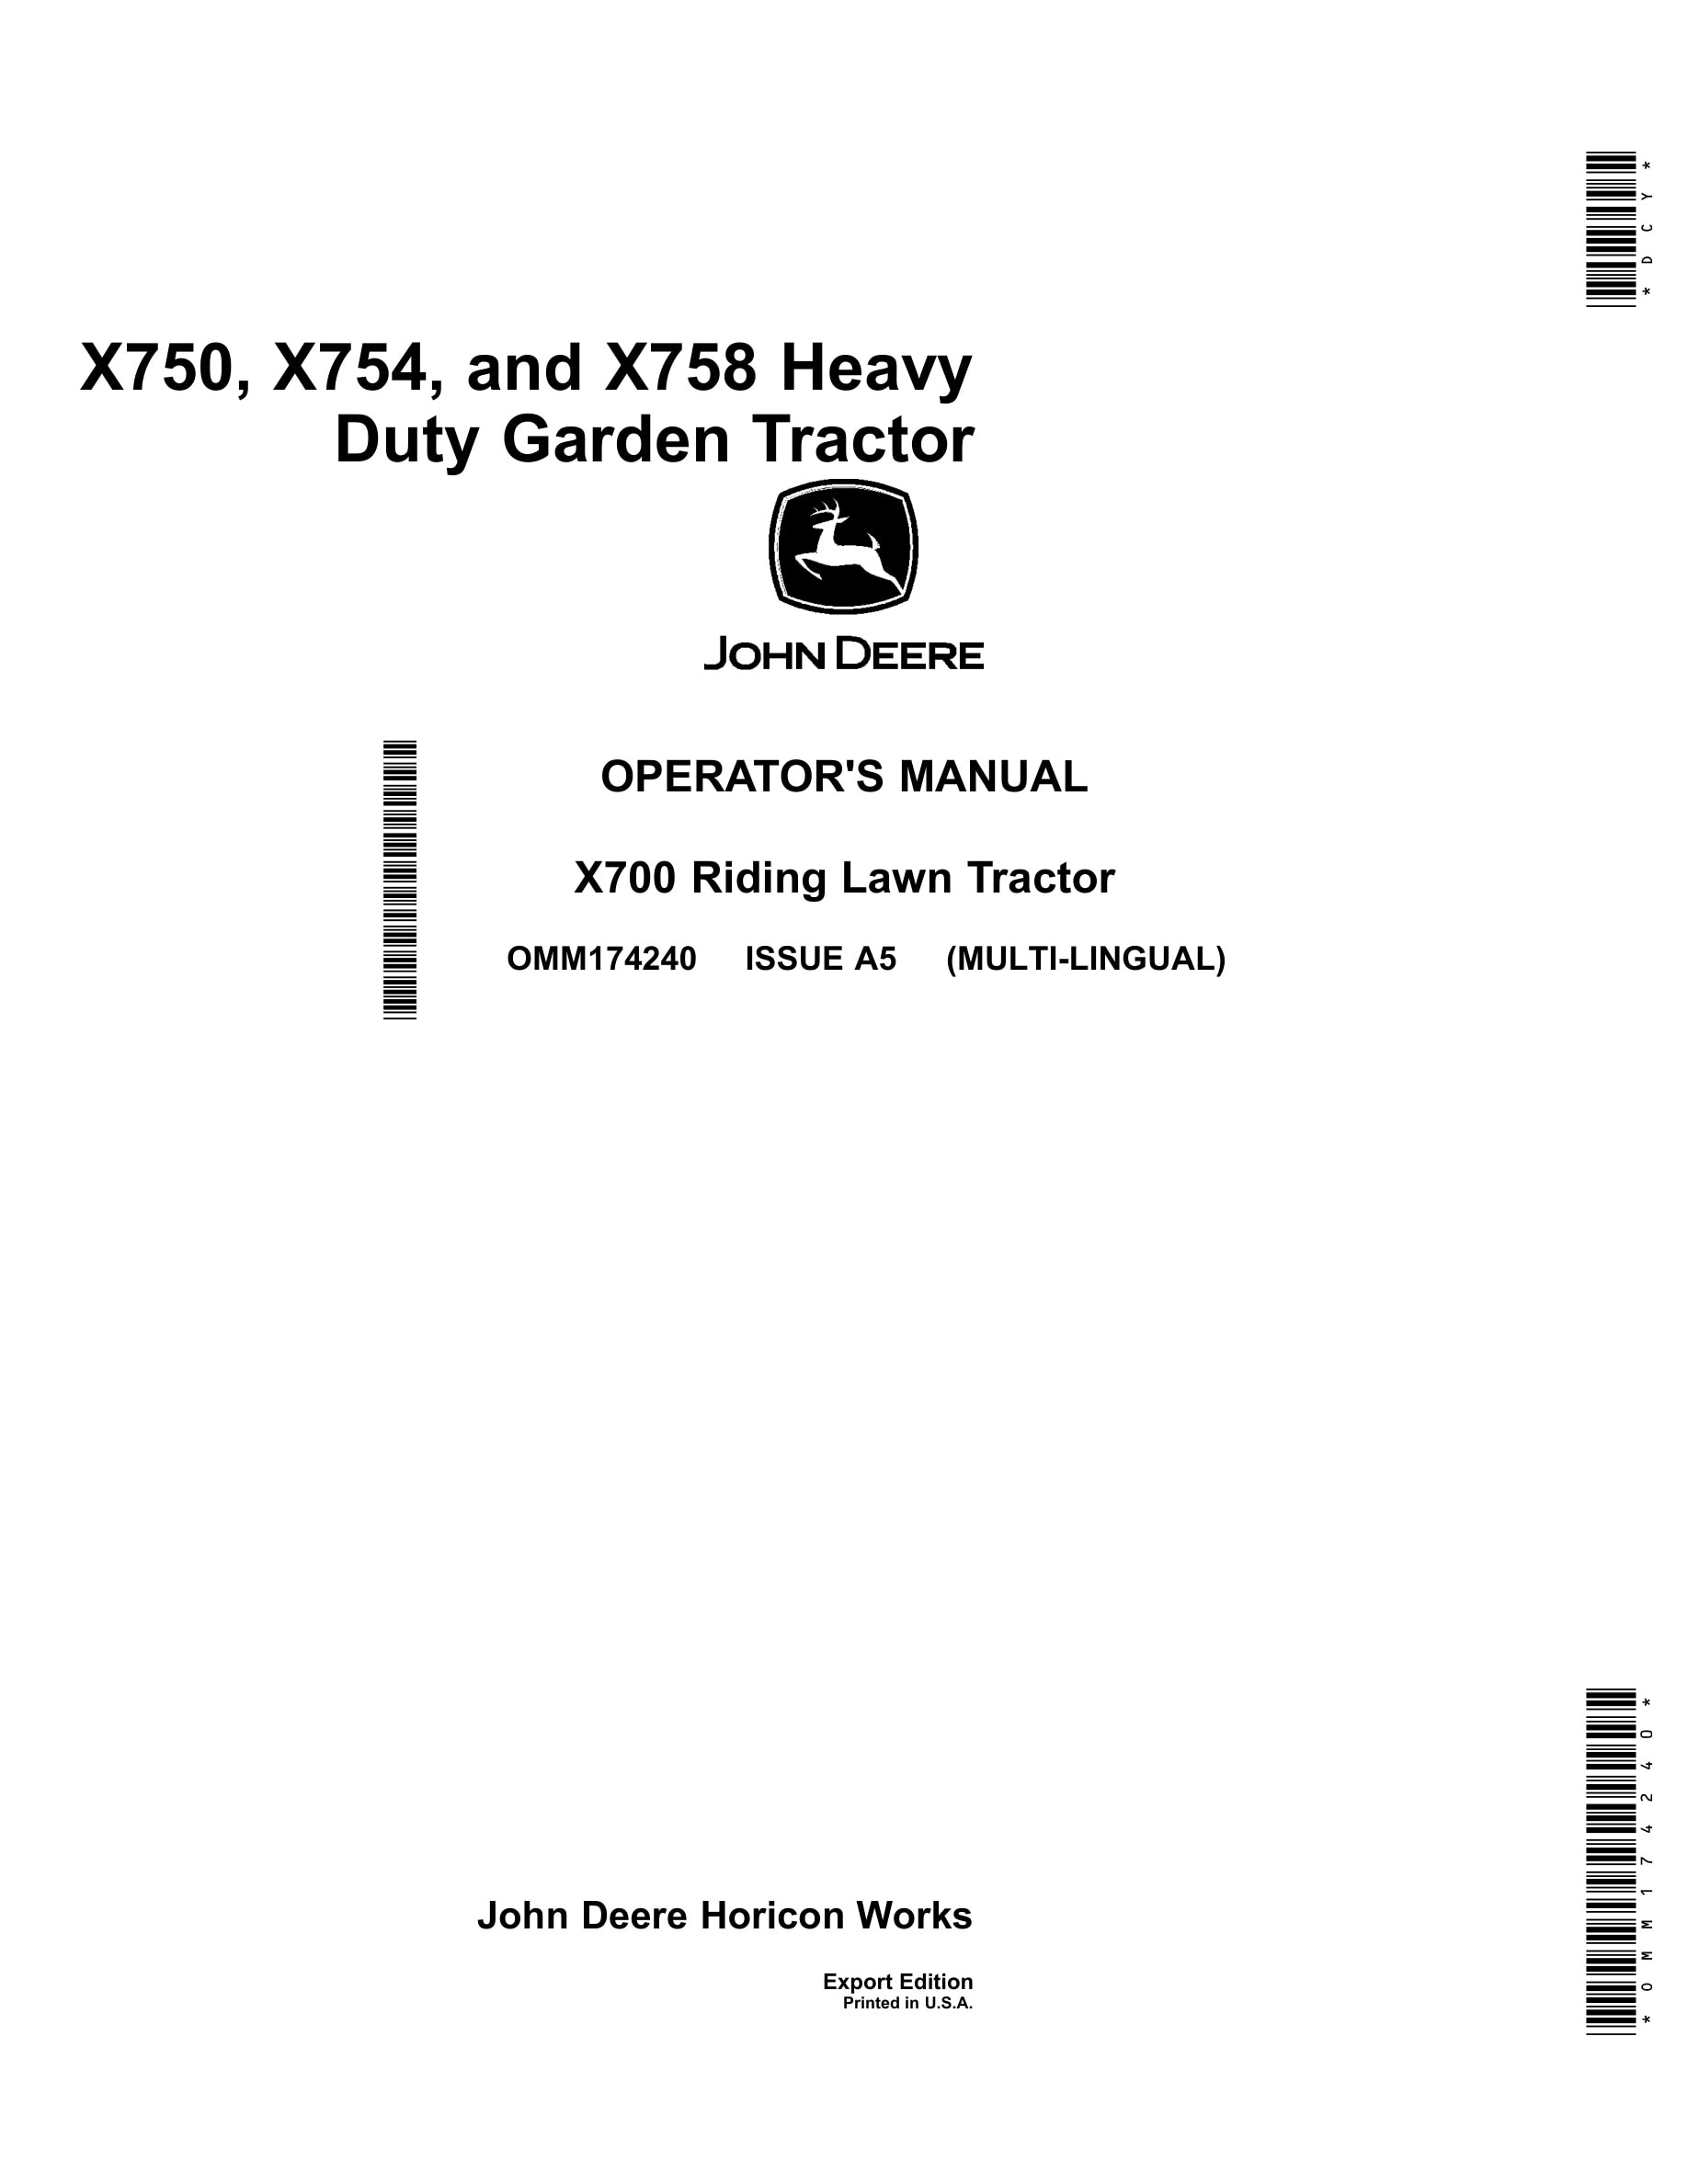 John Deere X750, X754, And X758 Heavy Duty Garden Tractors Operator Manual OMM174240-1